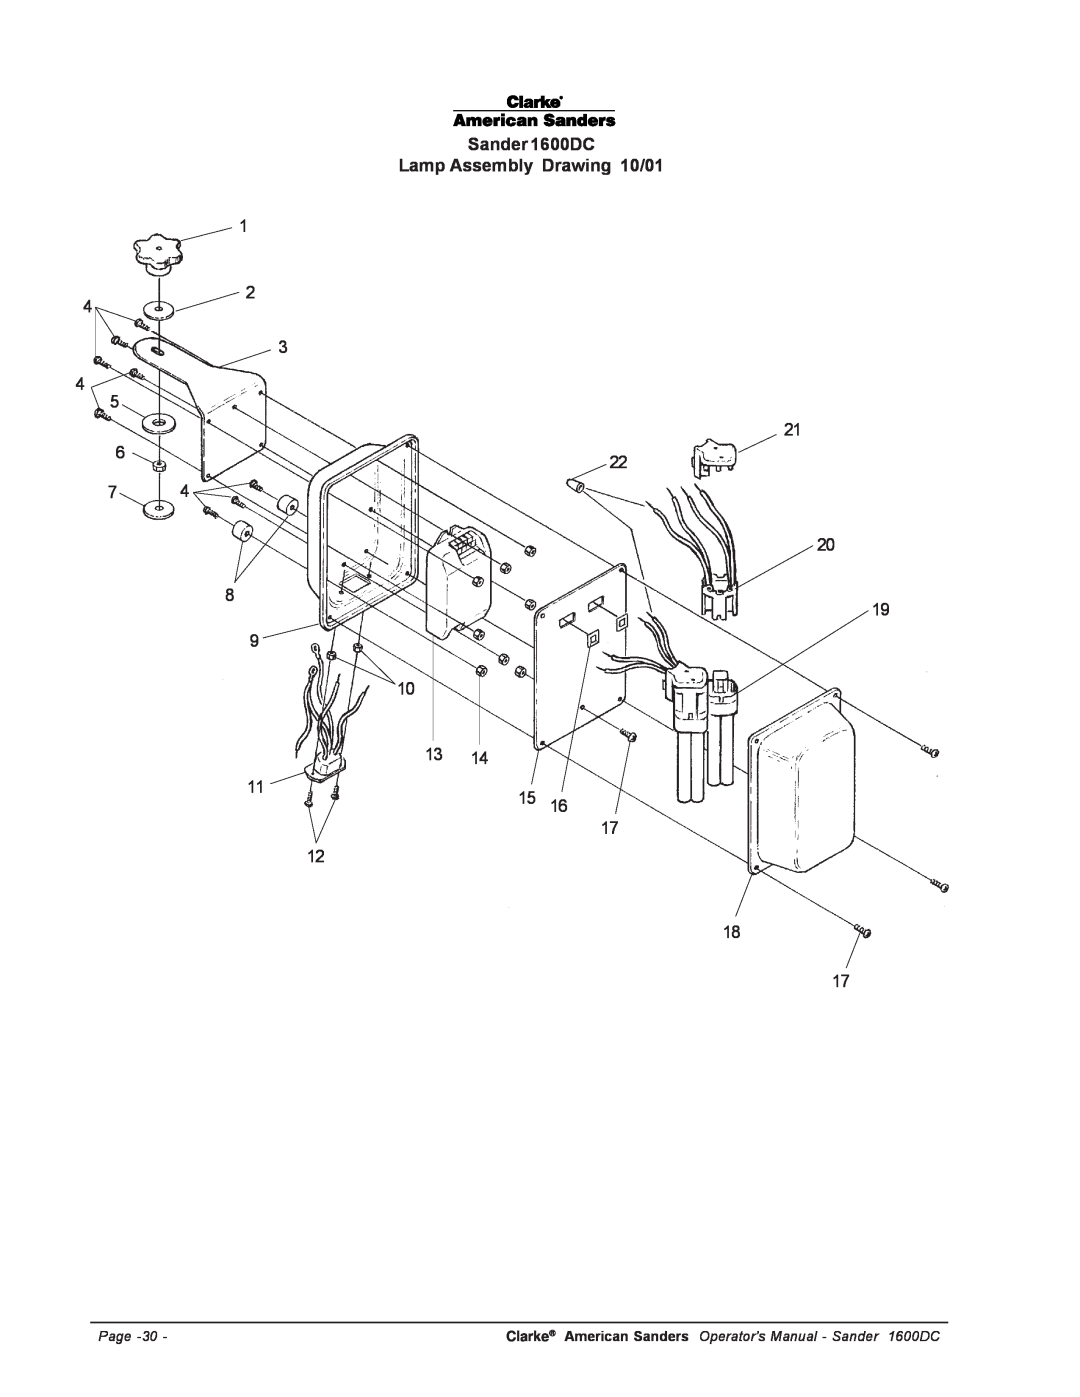 Nilfisk-ALTO C.A.V. 15 manual Sander 1600DC, Lamp Assembly Drawing 10/01, Page 